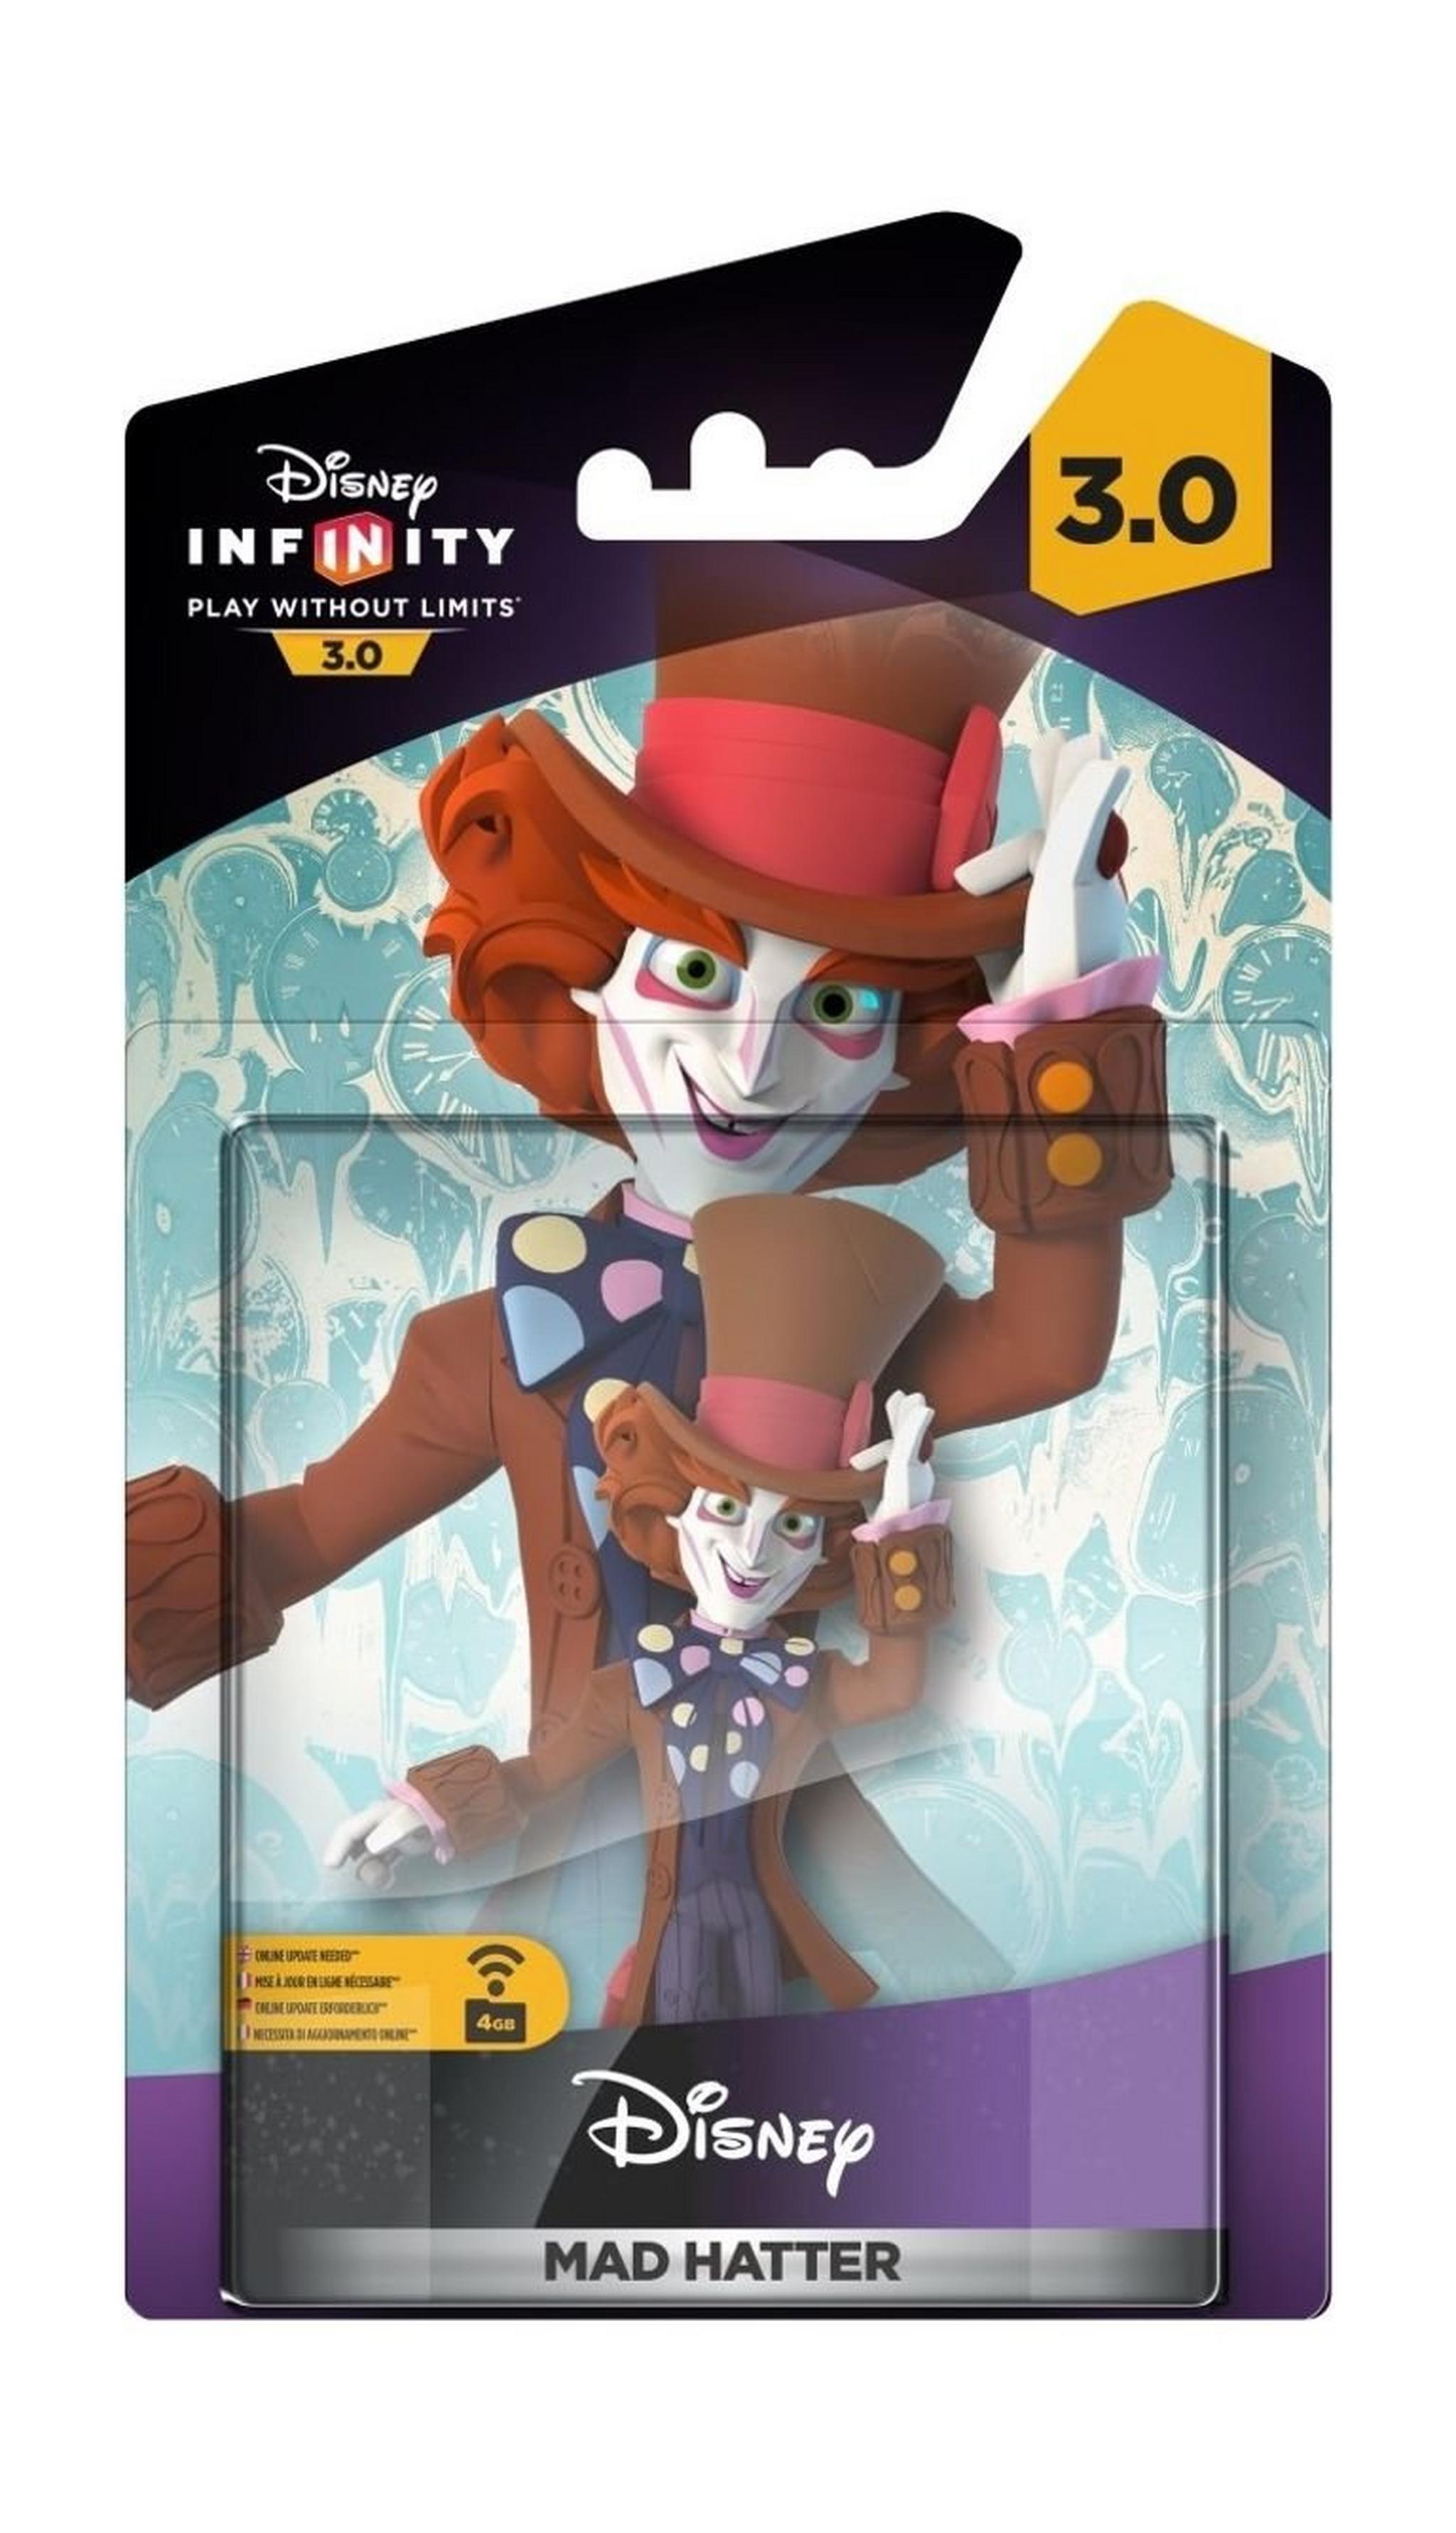 Disney Infinity 3.0 Edition: Mad Hatter Figure